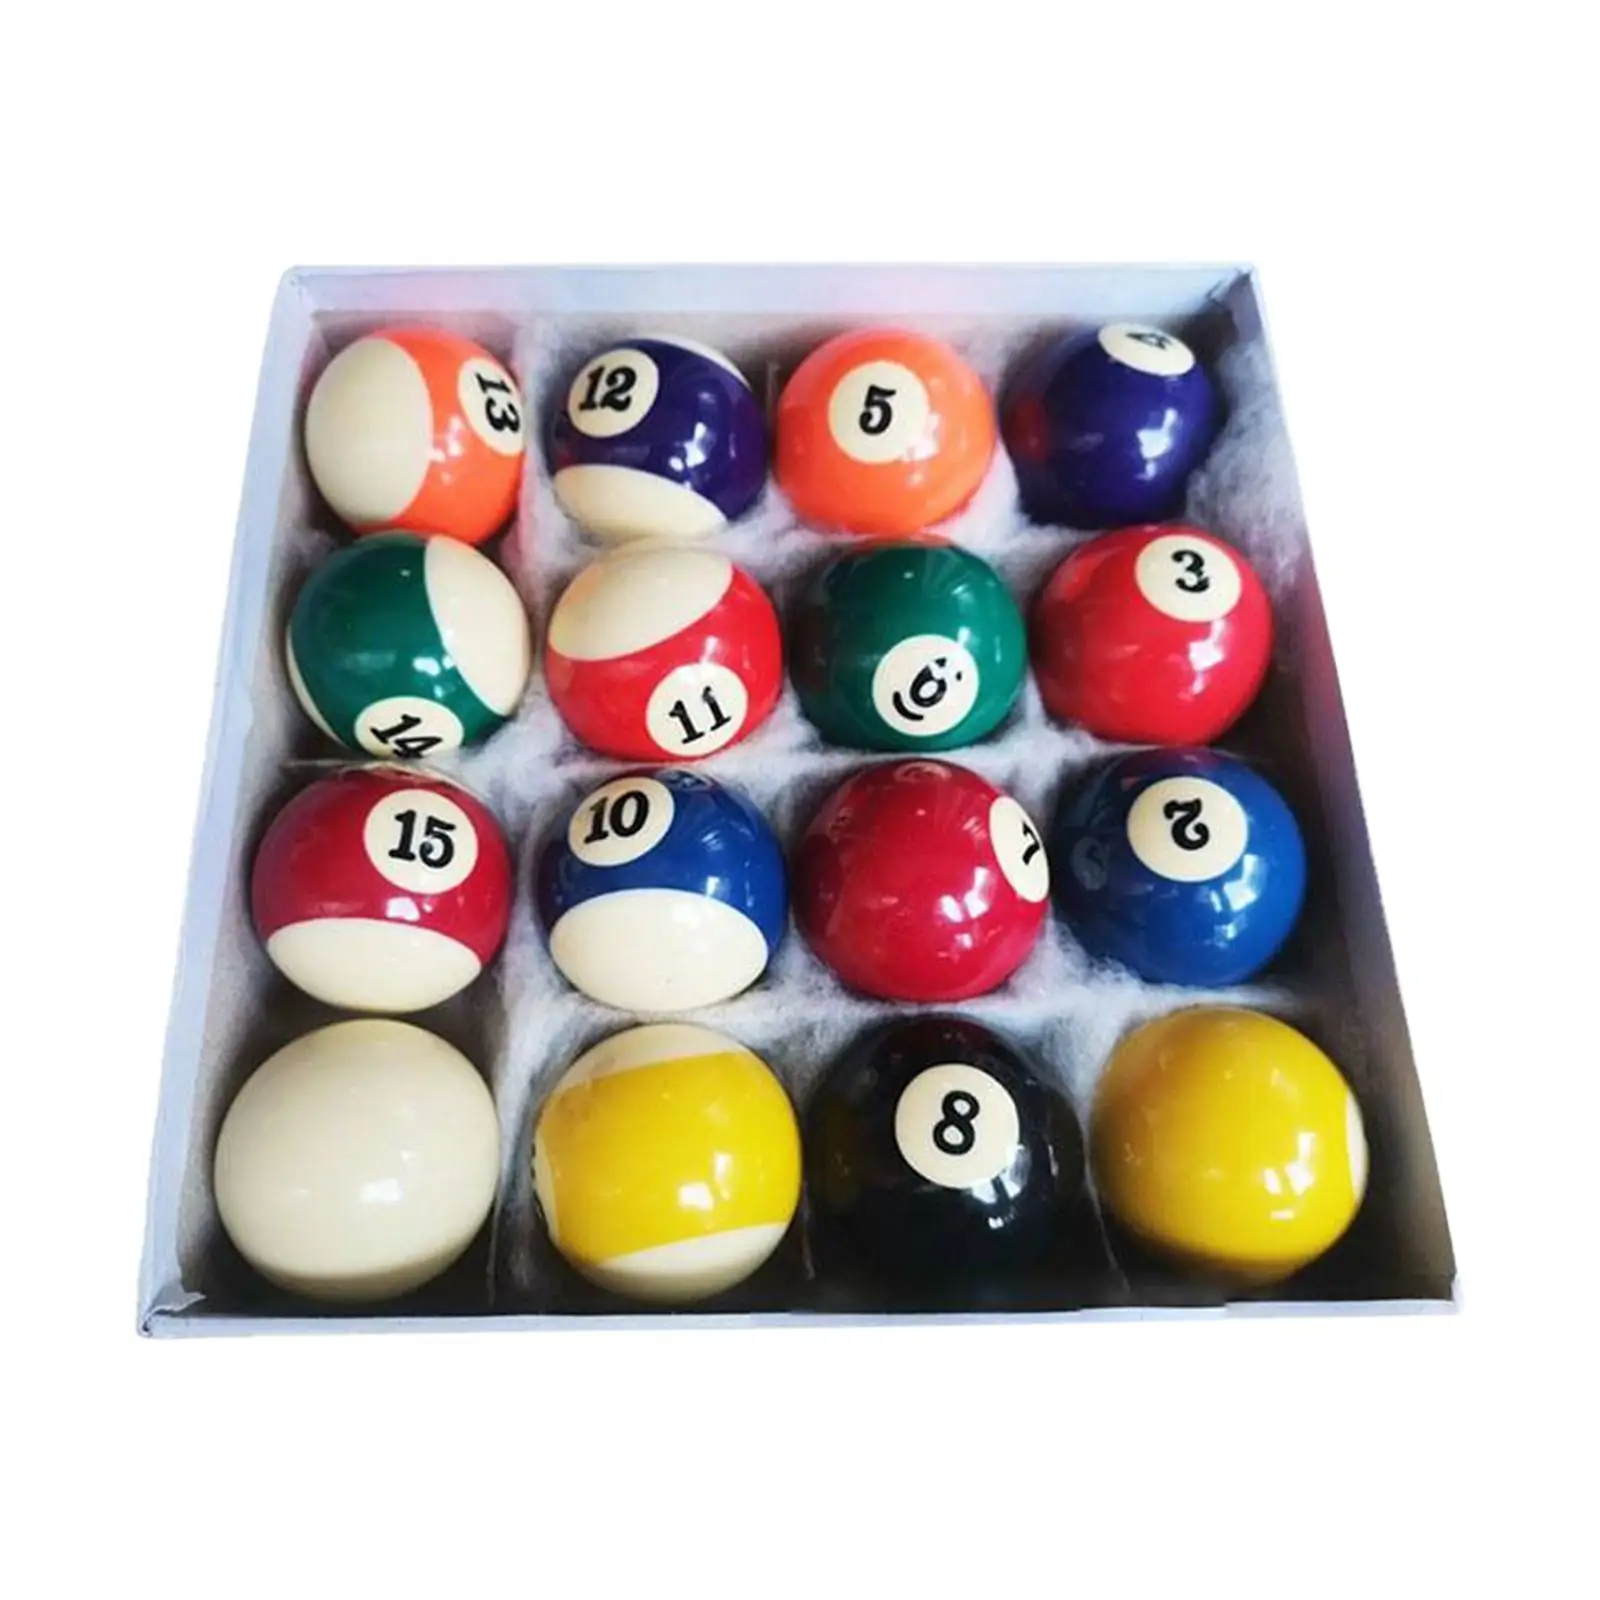 16x Billiard Balls Set Pool Balls Supplies Professional American Resin Billiard Balls Complete 16 Balls for Bars Game Rooms